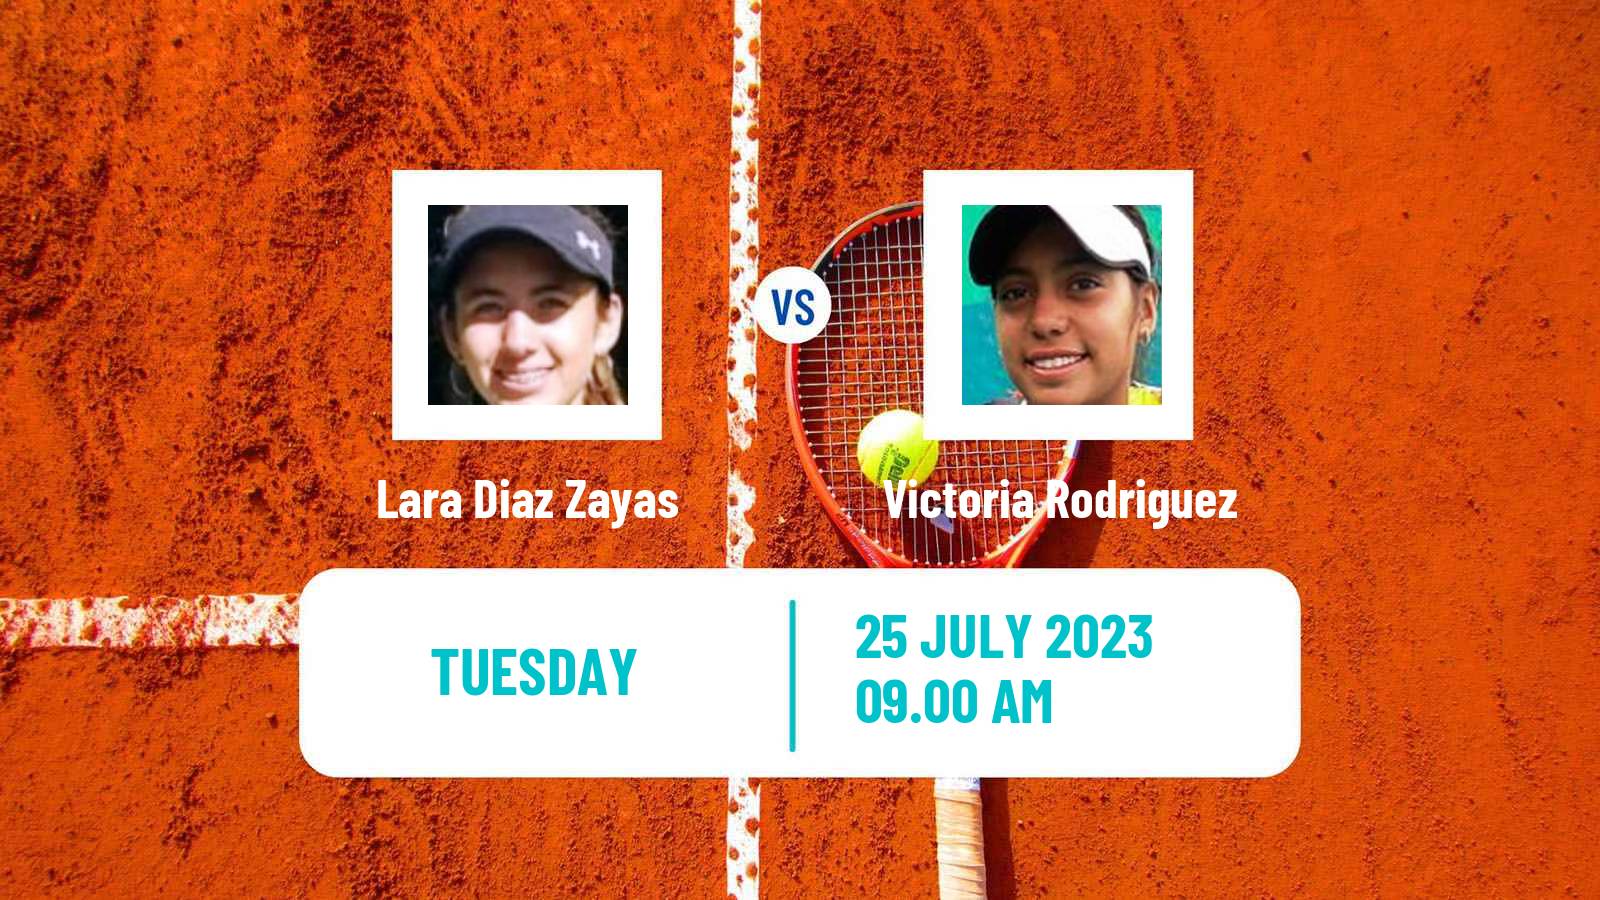 Tennis ITF W25 Bragado Women Lara Diaz Zayas - Victoria Rodriguez